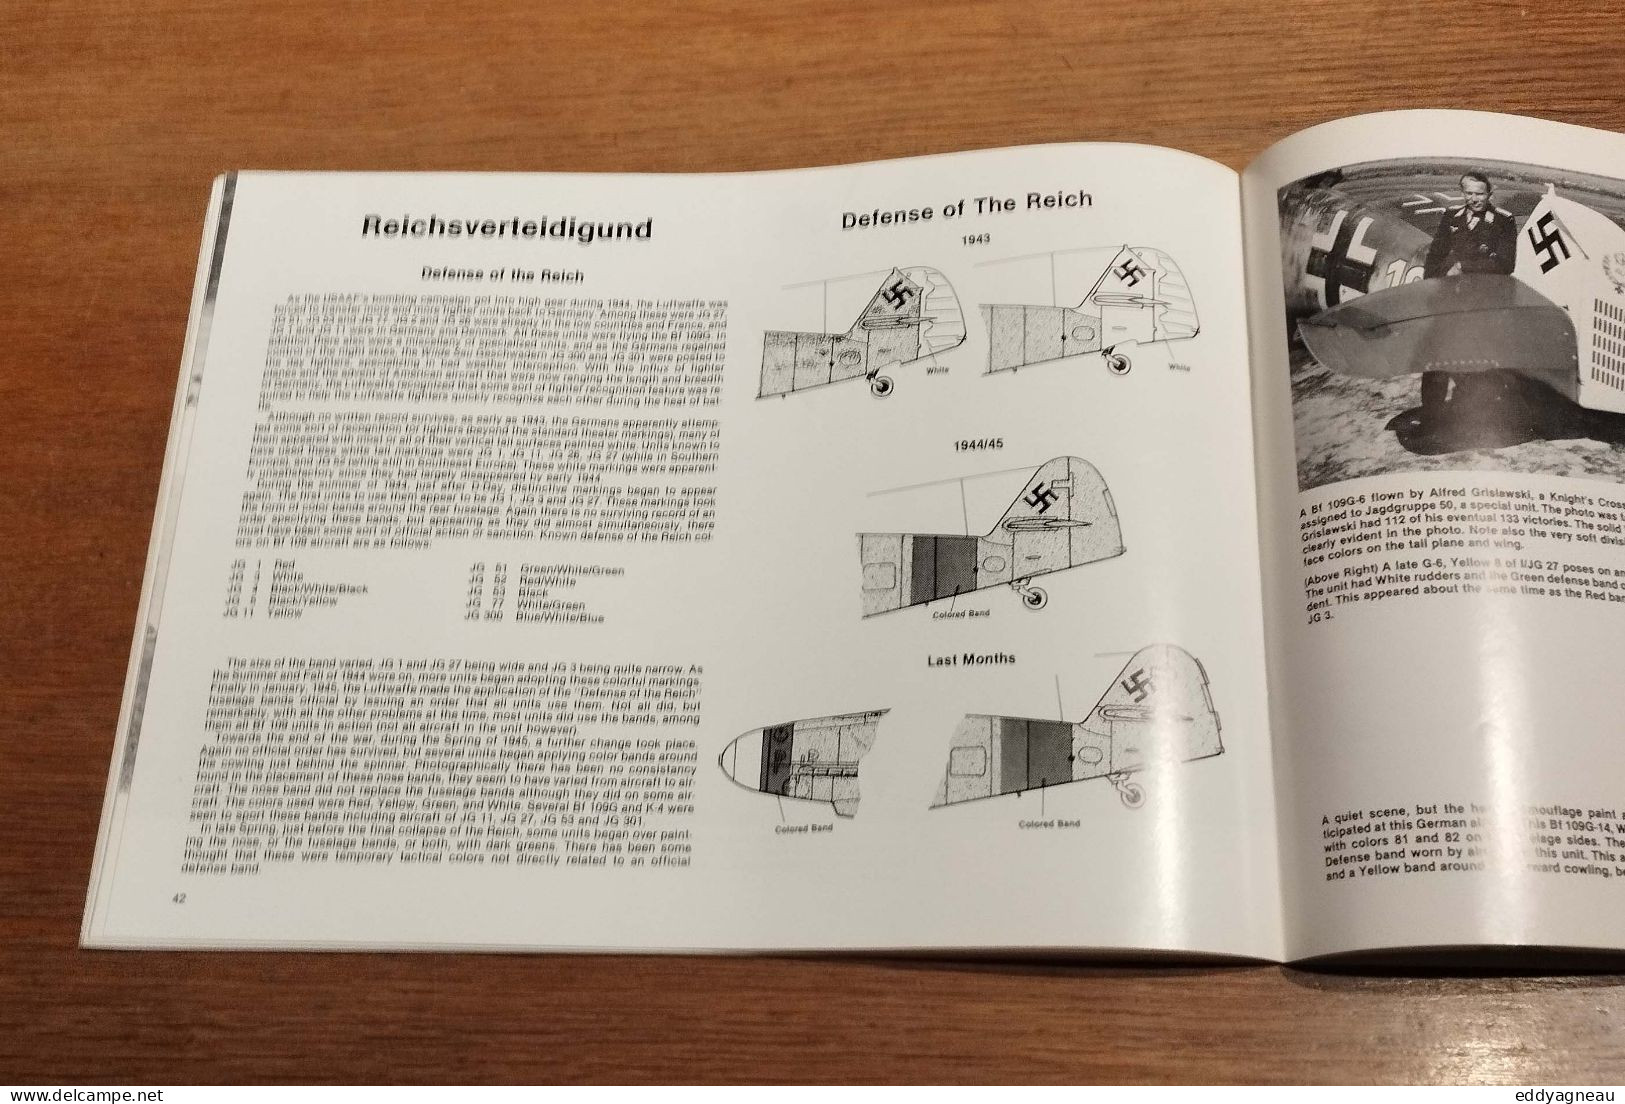 Messerschmitt BT 109 in action - Part 1 &2 - Squadron/Signal publications